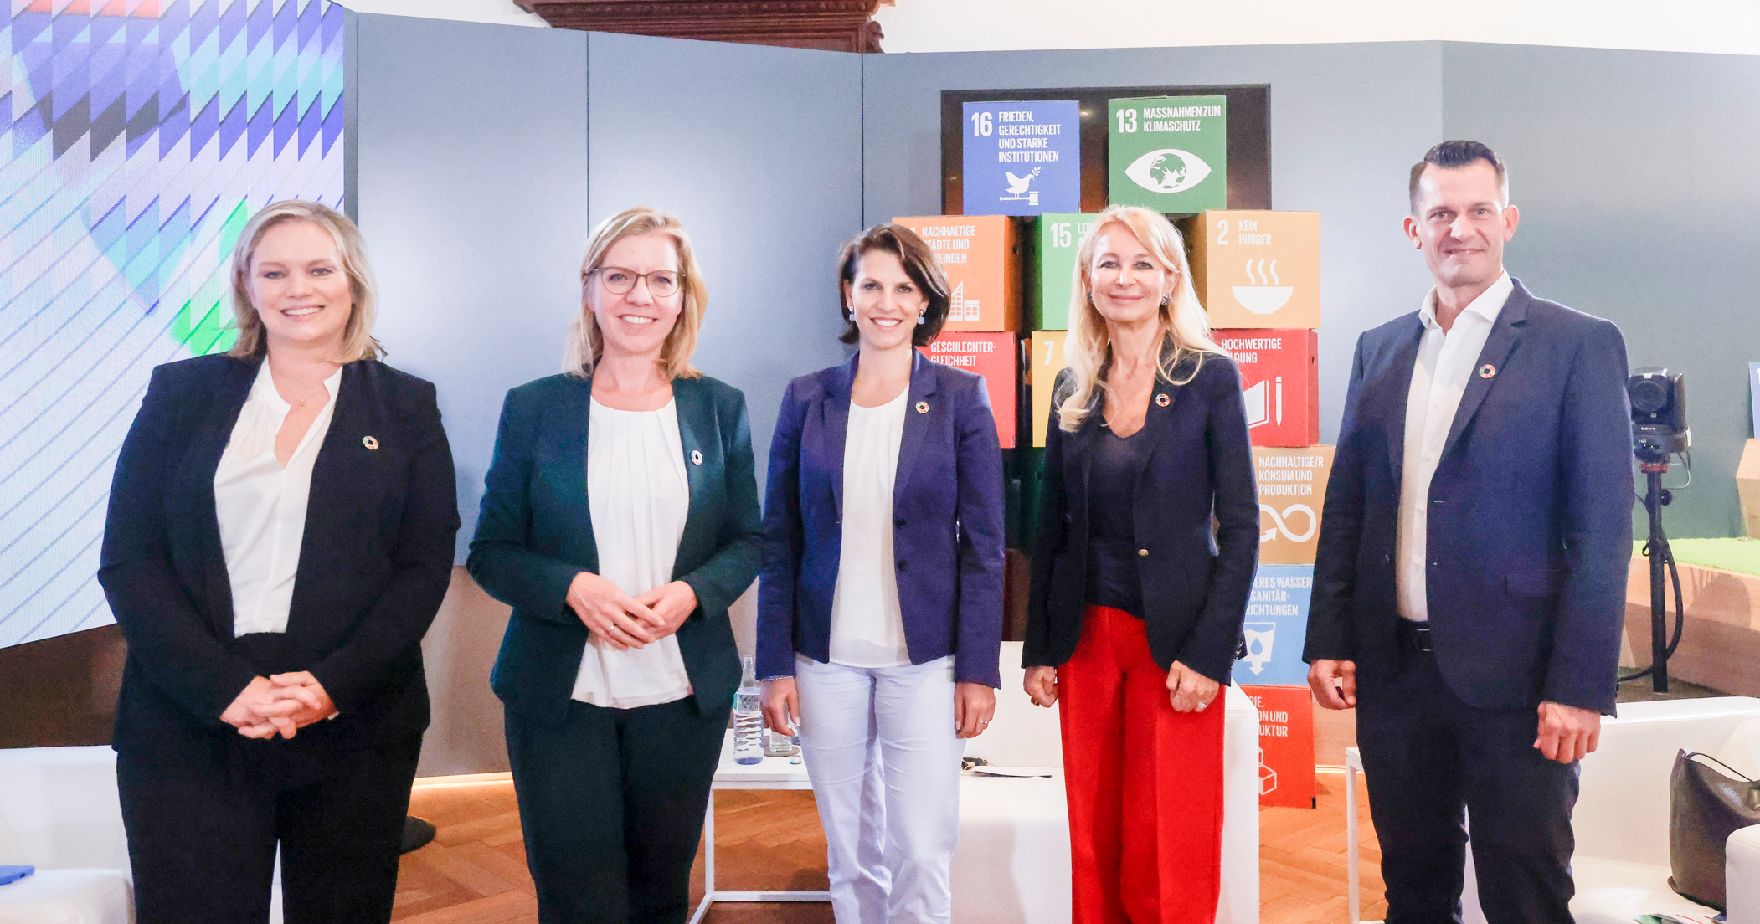 Am 28. September 2021 nahm Bundesministerin Karoline Edtstadler (m.) am SDG Dialogforum teil. Im Bild mit Bundesministerin Leonore Gewessler und Bundesminister Wolfgang Mückstein.